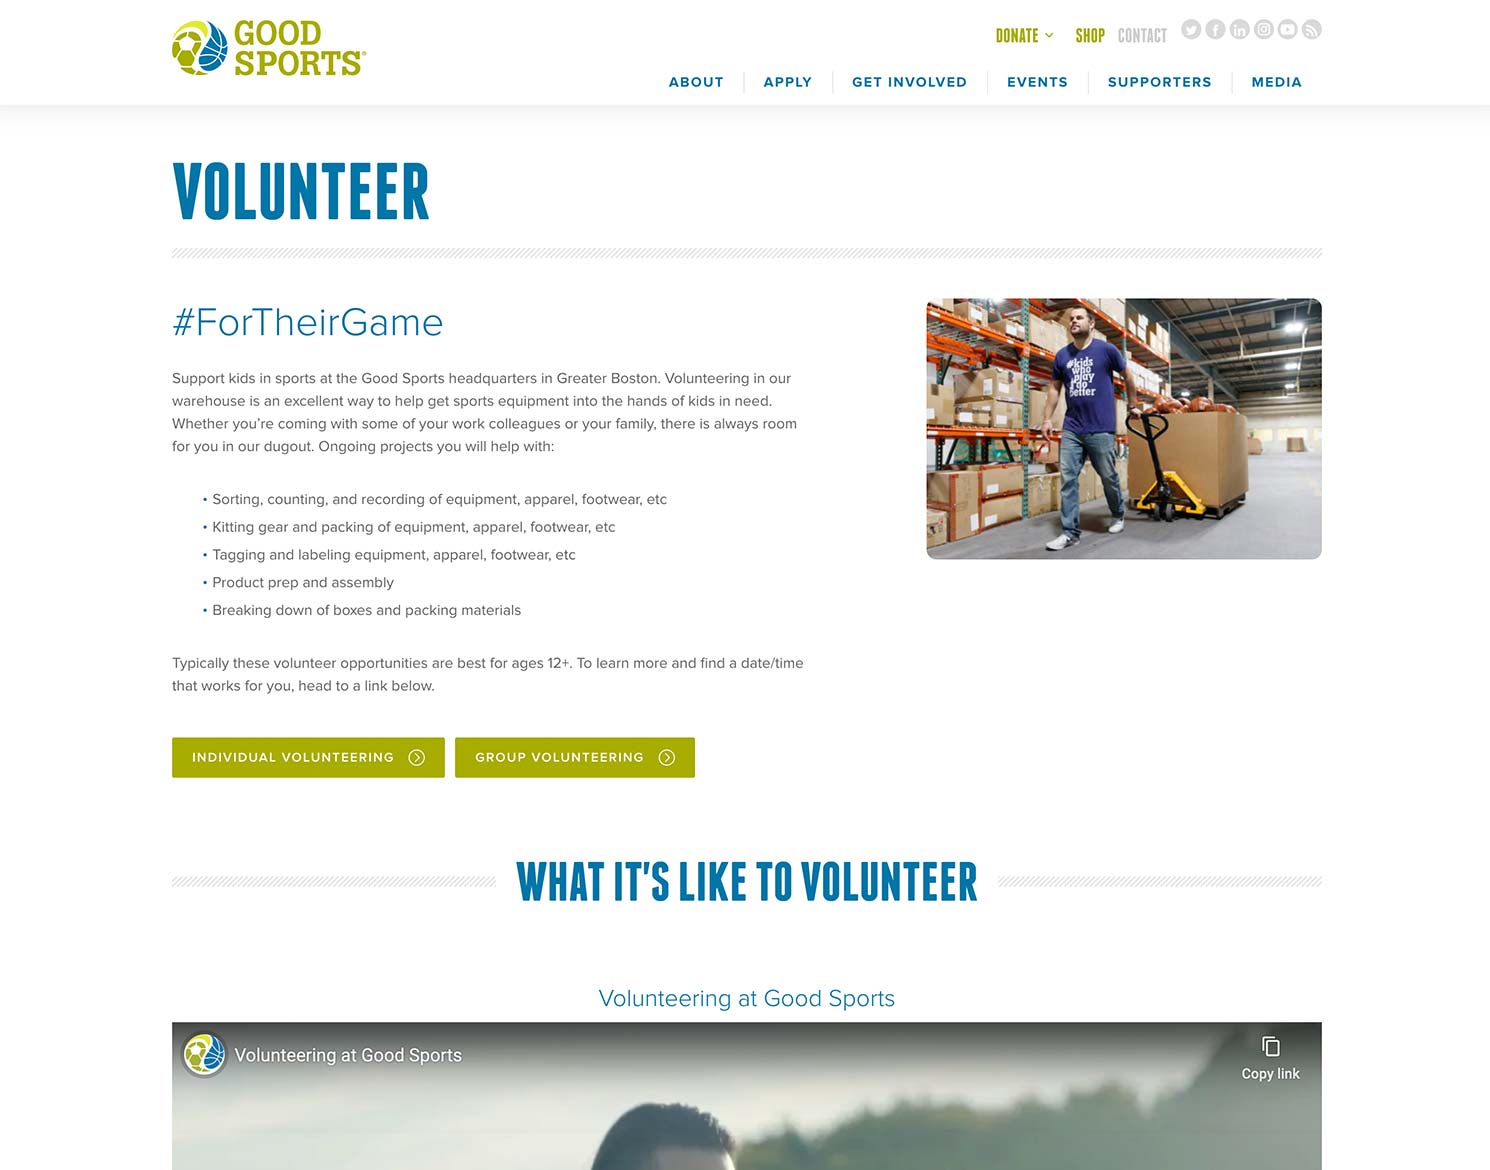 Good Sports website volunteer page